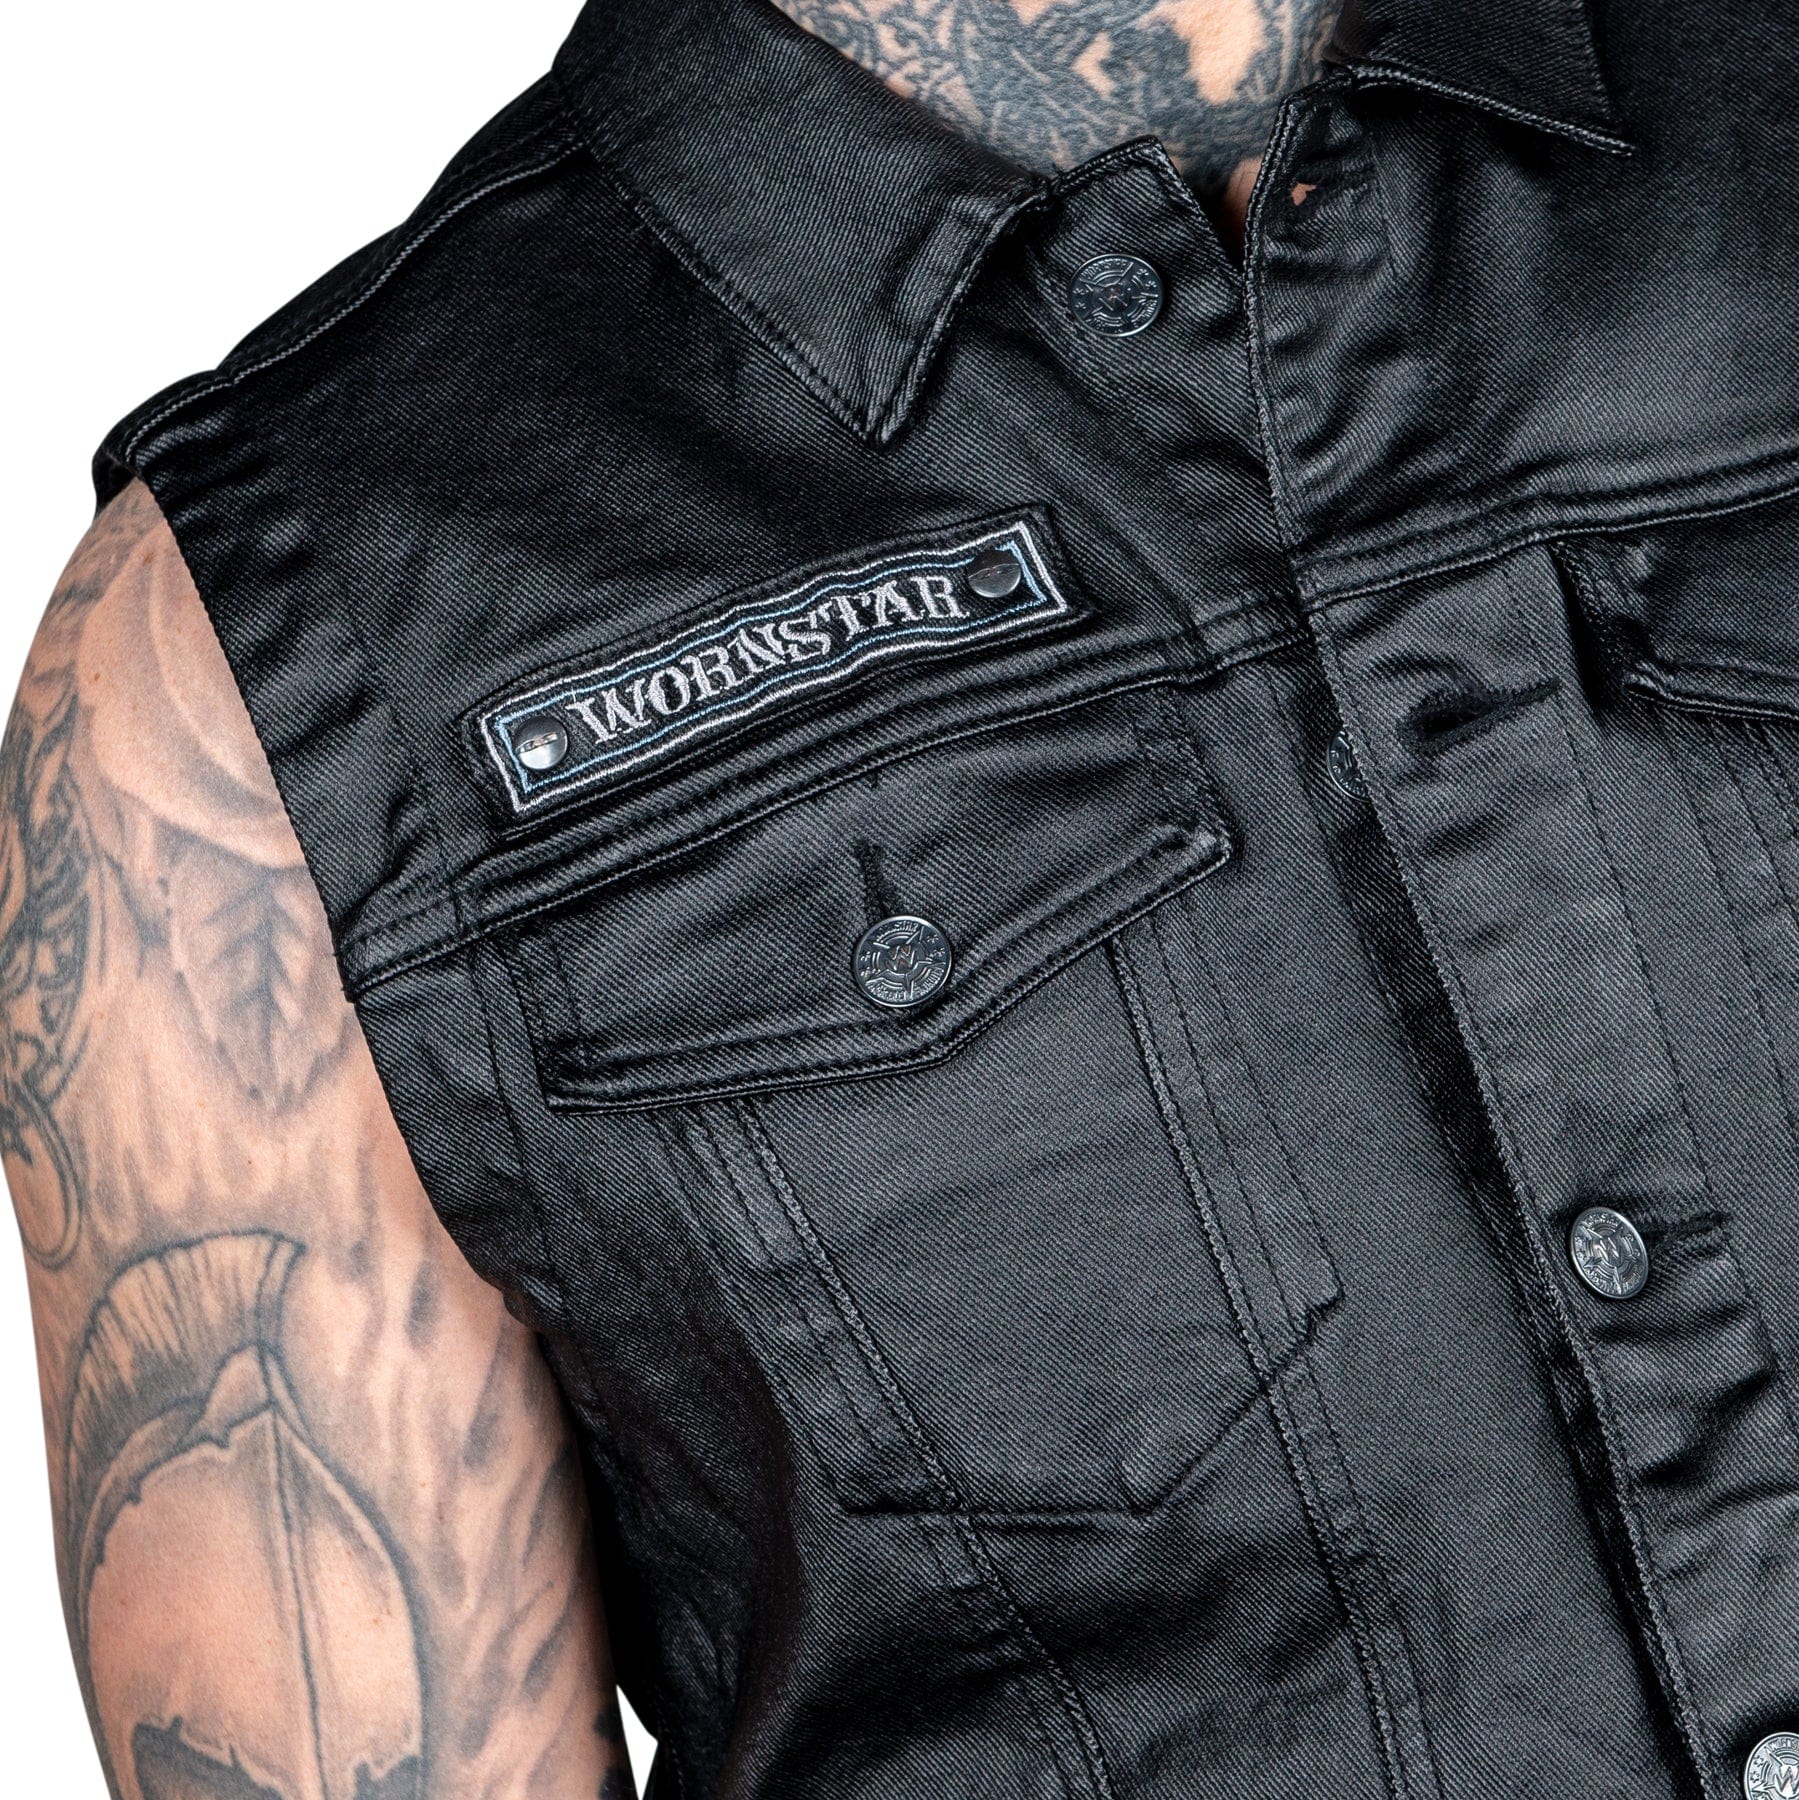 Wornstar Clothing Mens Vest. Idolmaker Waxed Denim Vest- Black